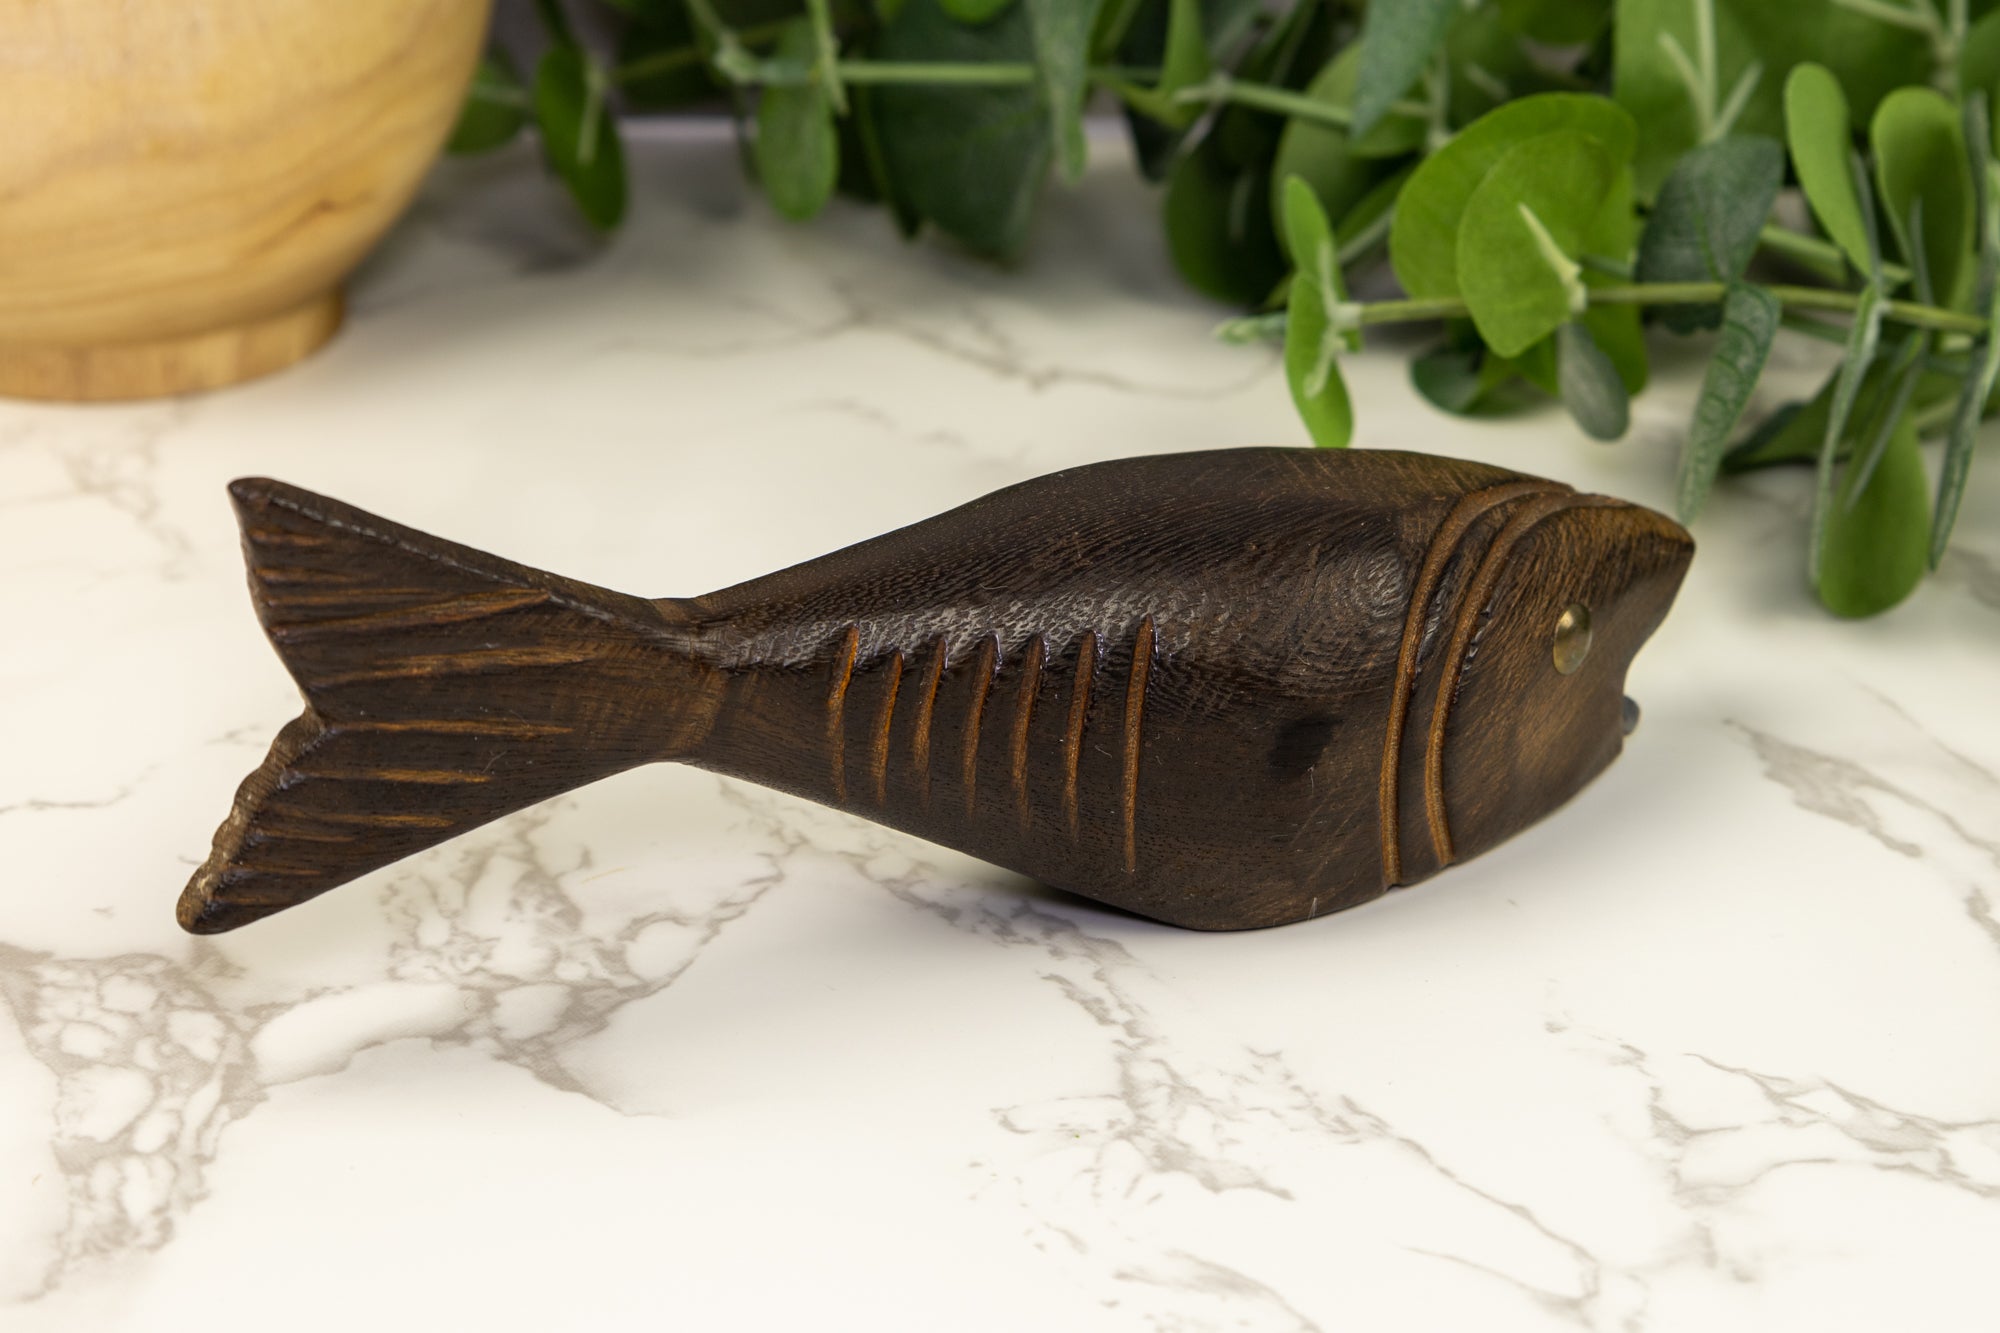 Fish Bottle Opener Wood Carving